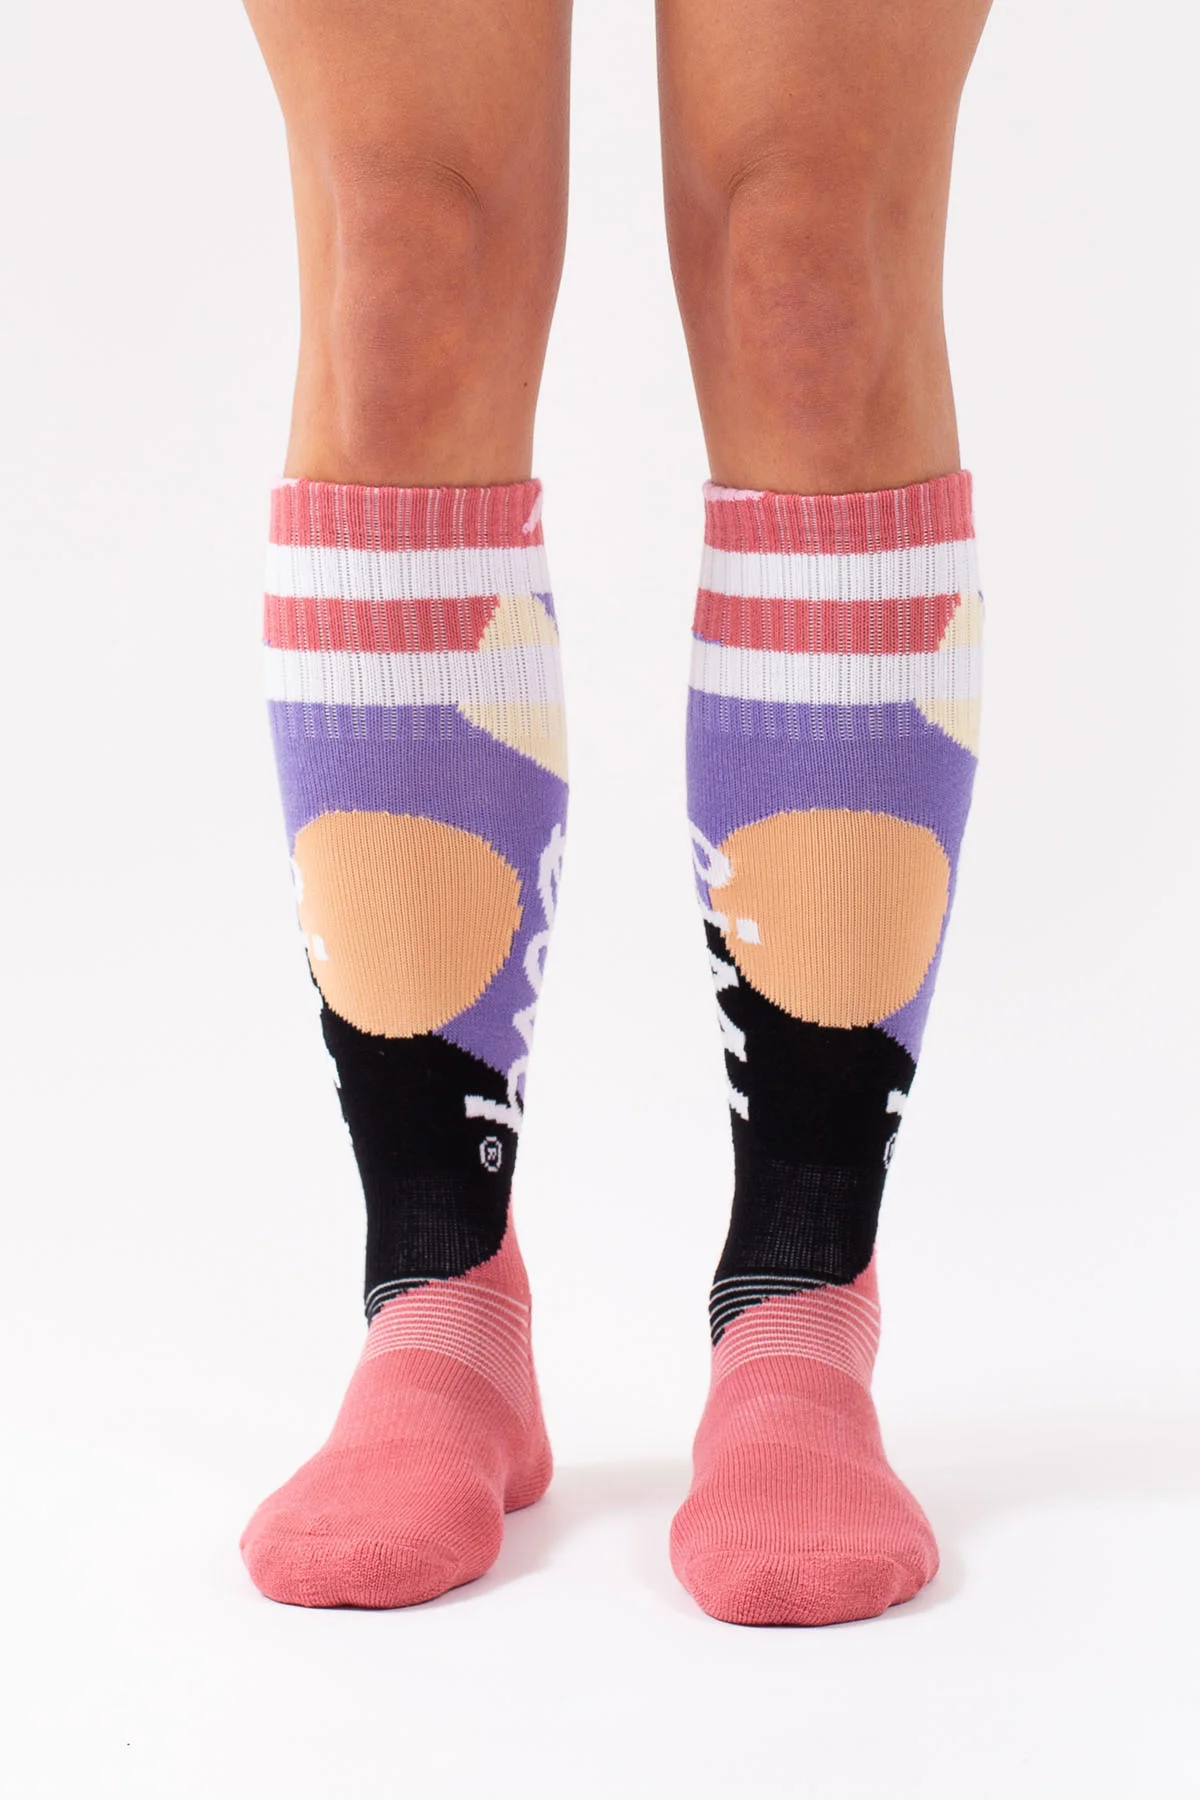 Cheerleader Wool Socks - Abstract Shapes